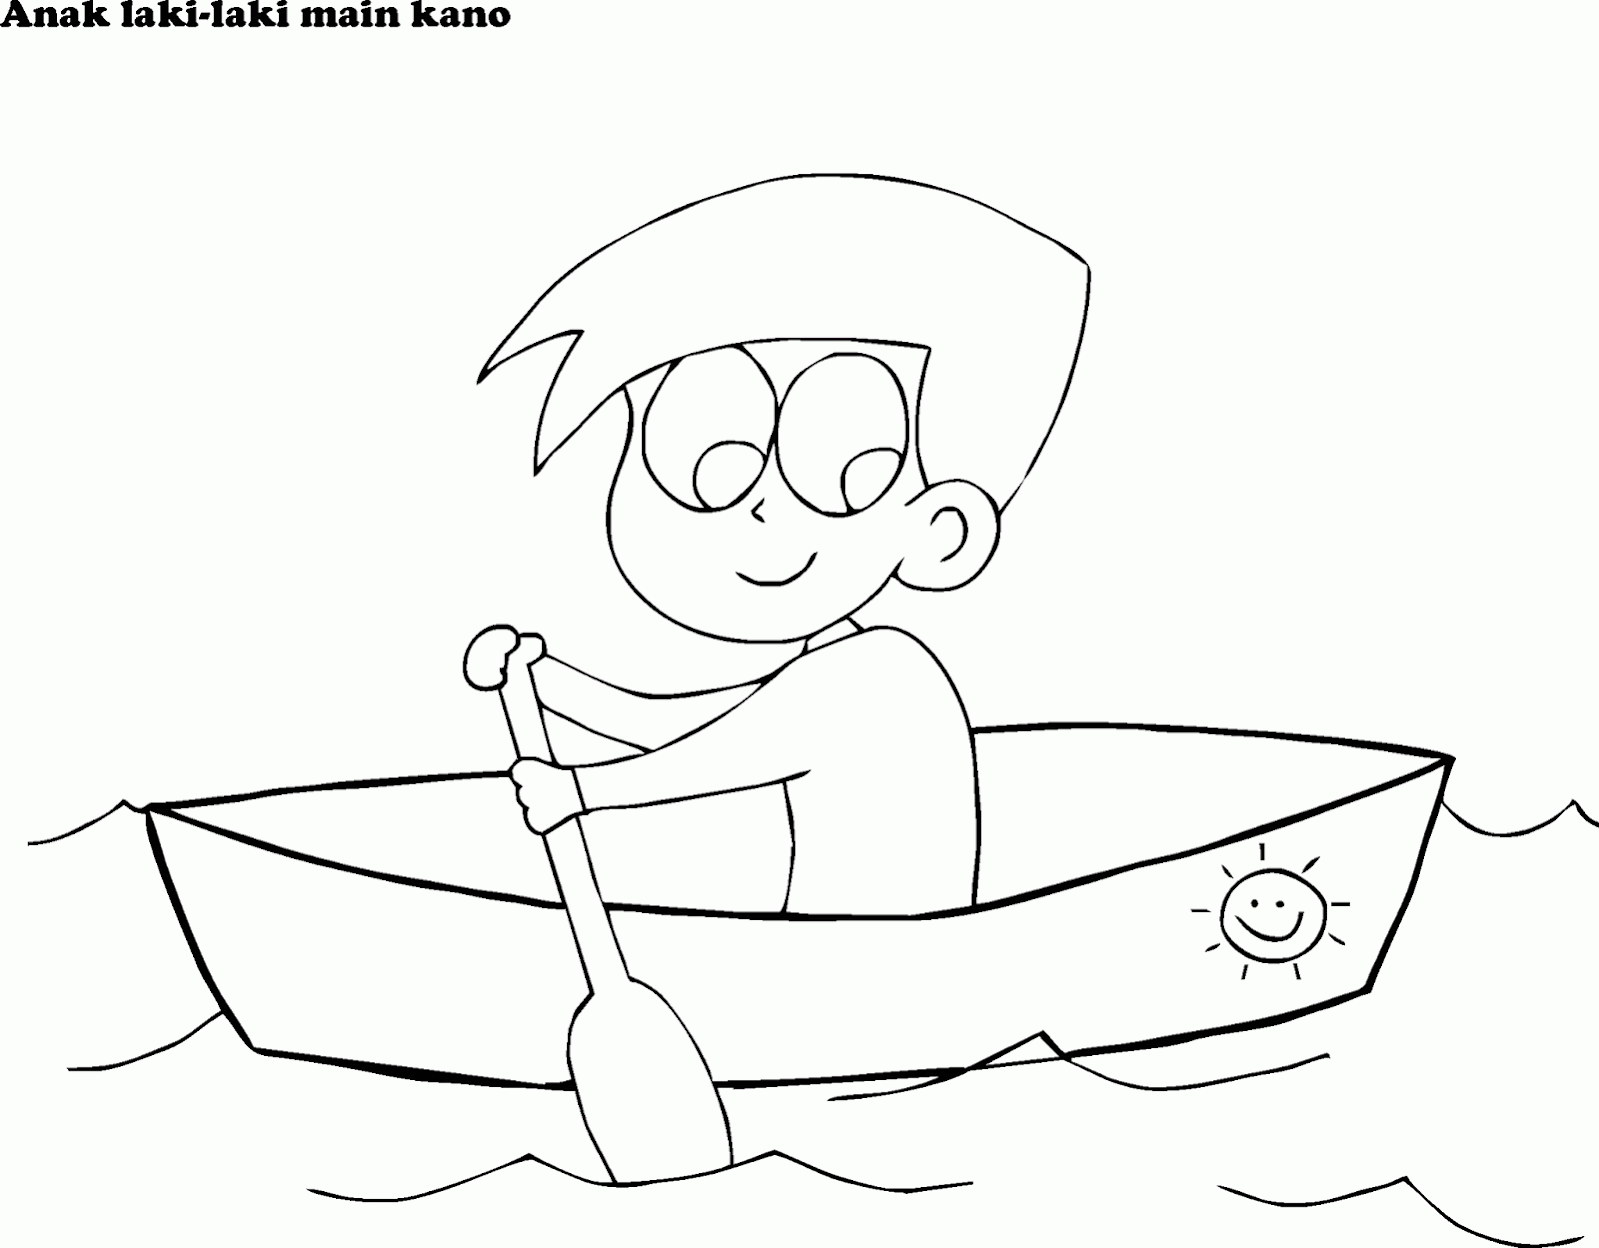 Mewarnai Gambar Anak Anak Main Kano Perahu Sanpan Contoh Anak PAUD